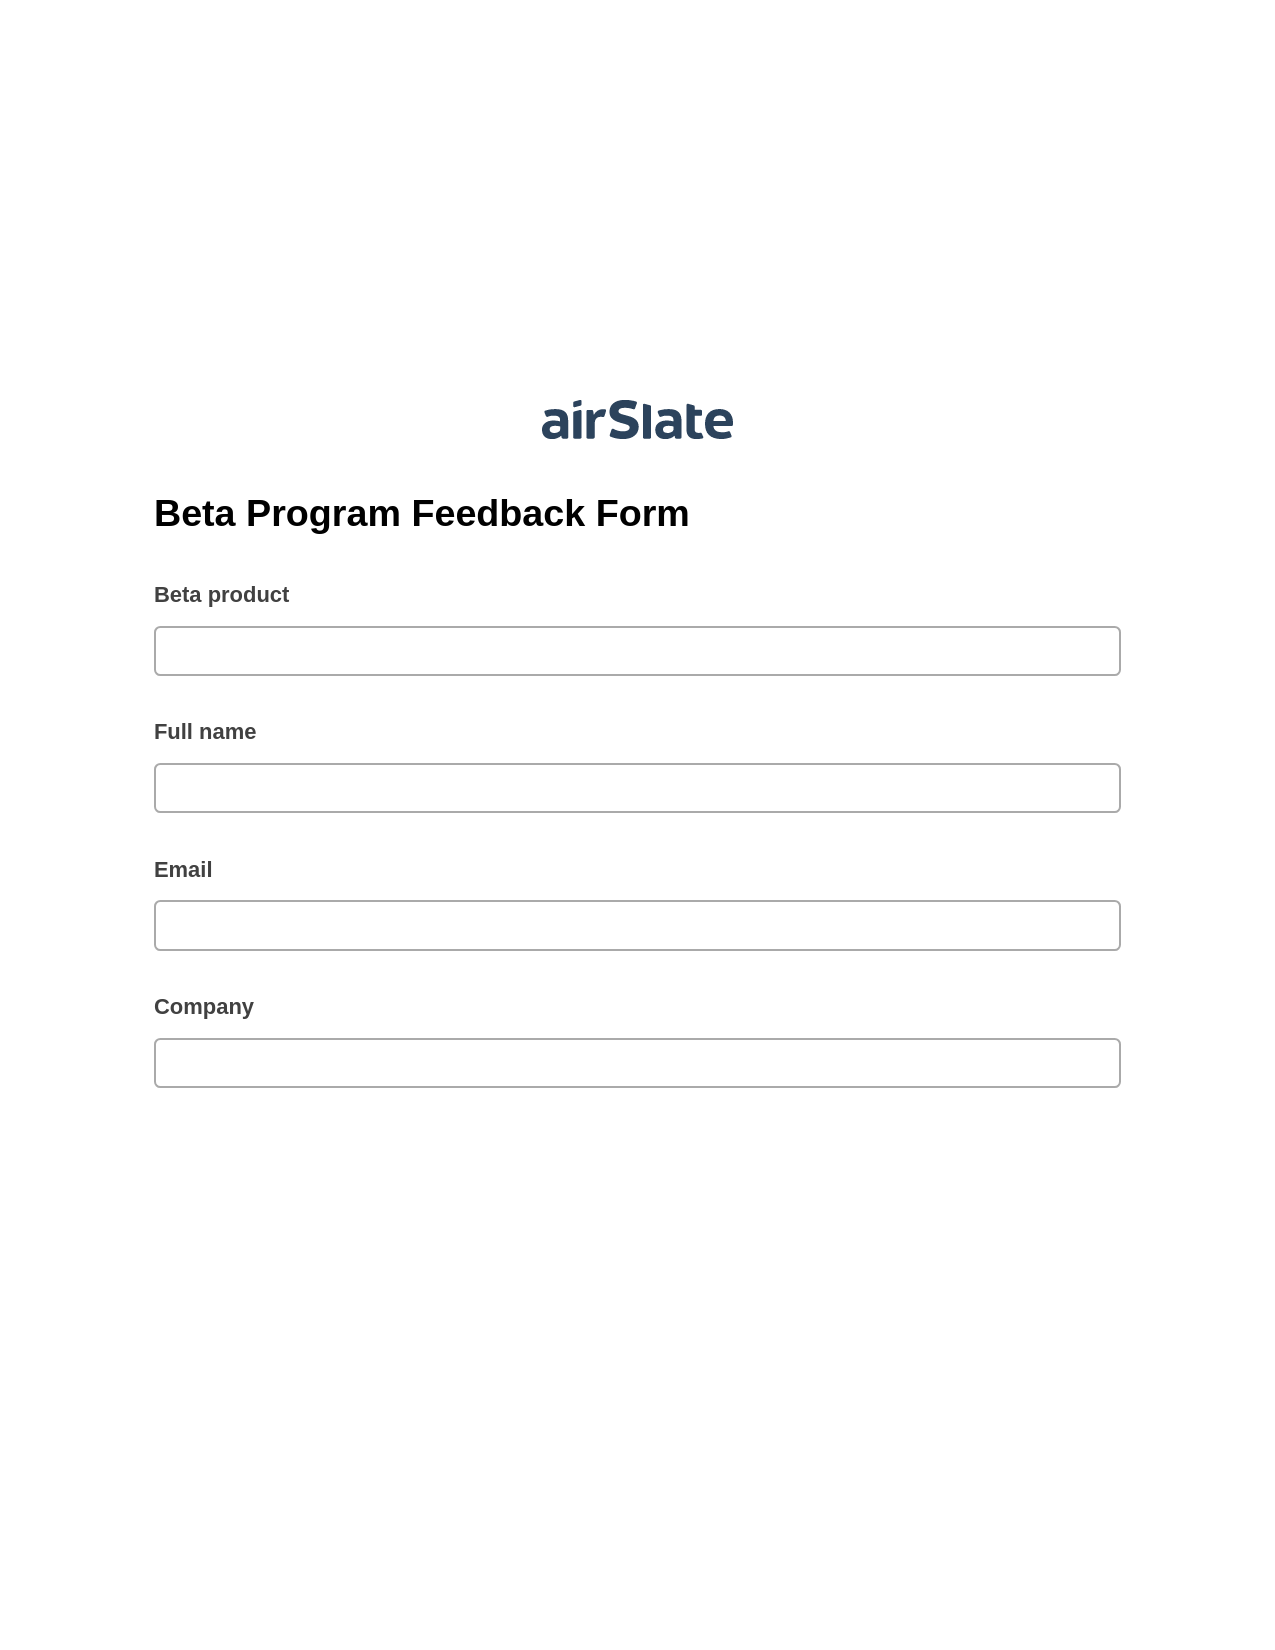 Multirole Beta Program Feedback Form Pre-fill from Google Sheets Bot, Remove Slate Bot, Post-finish Document Bot